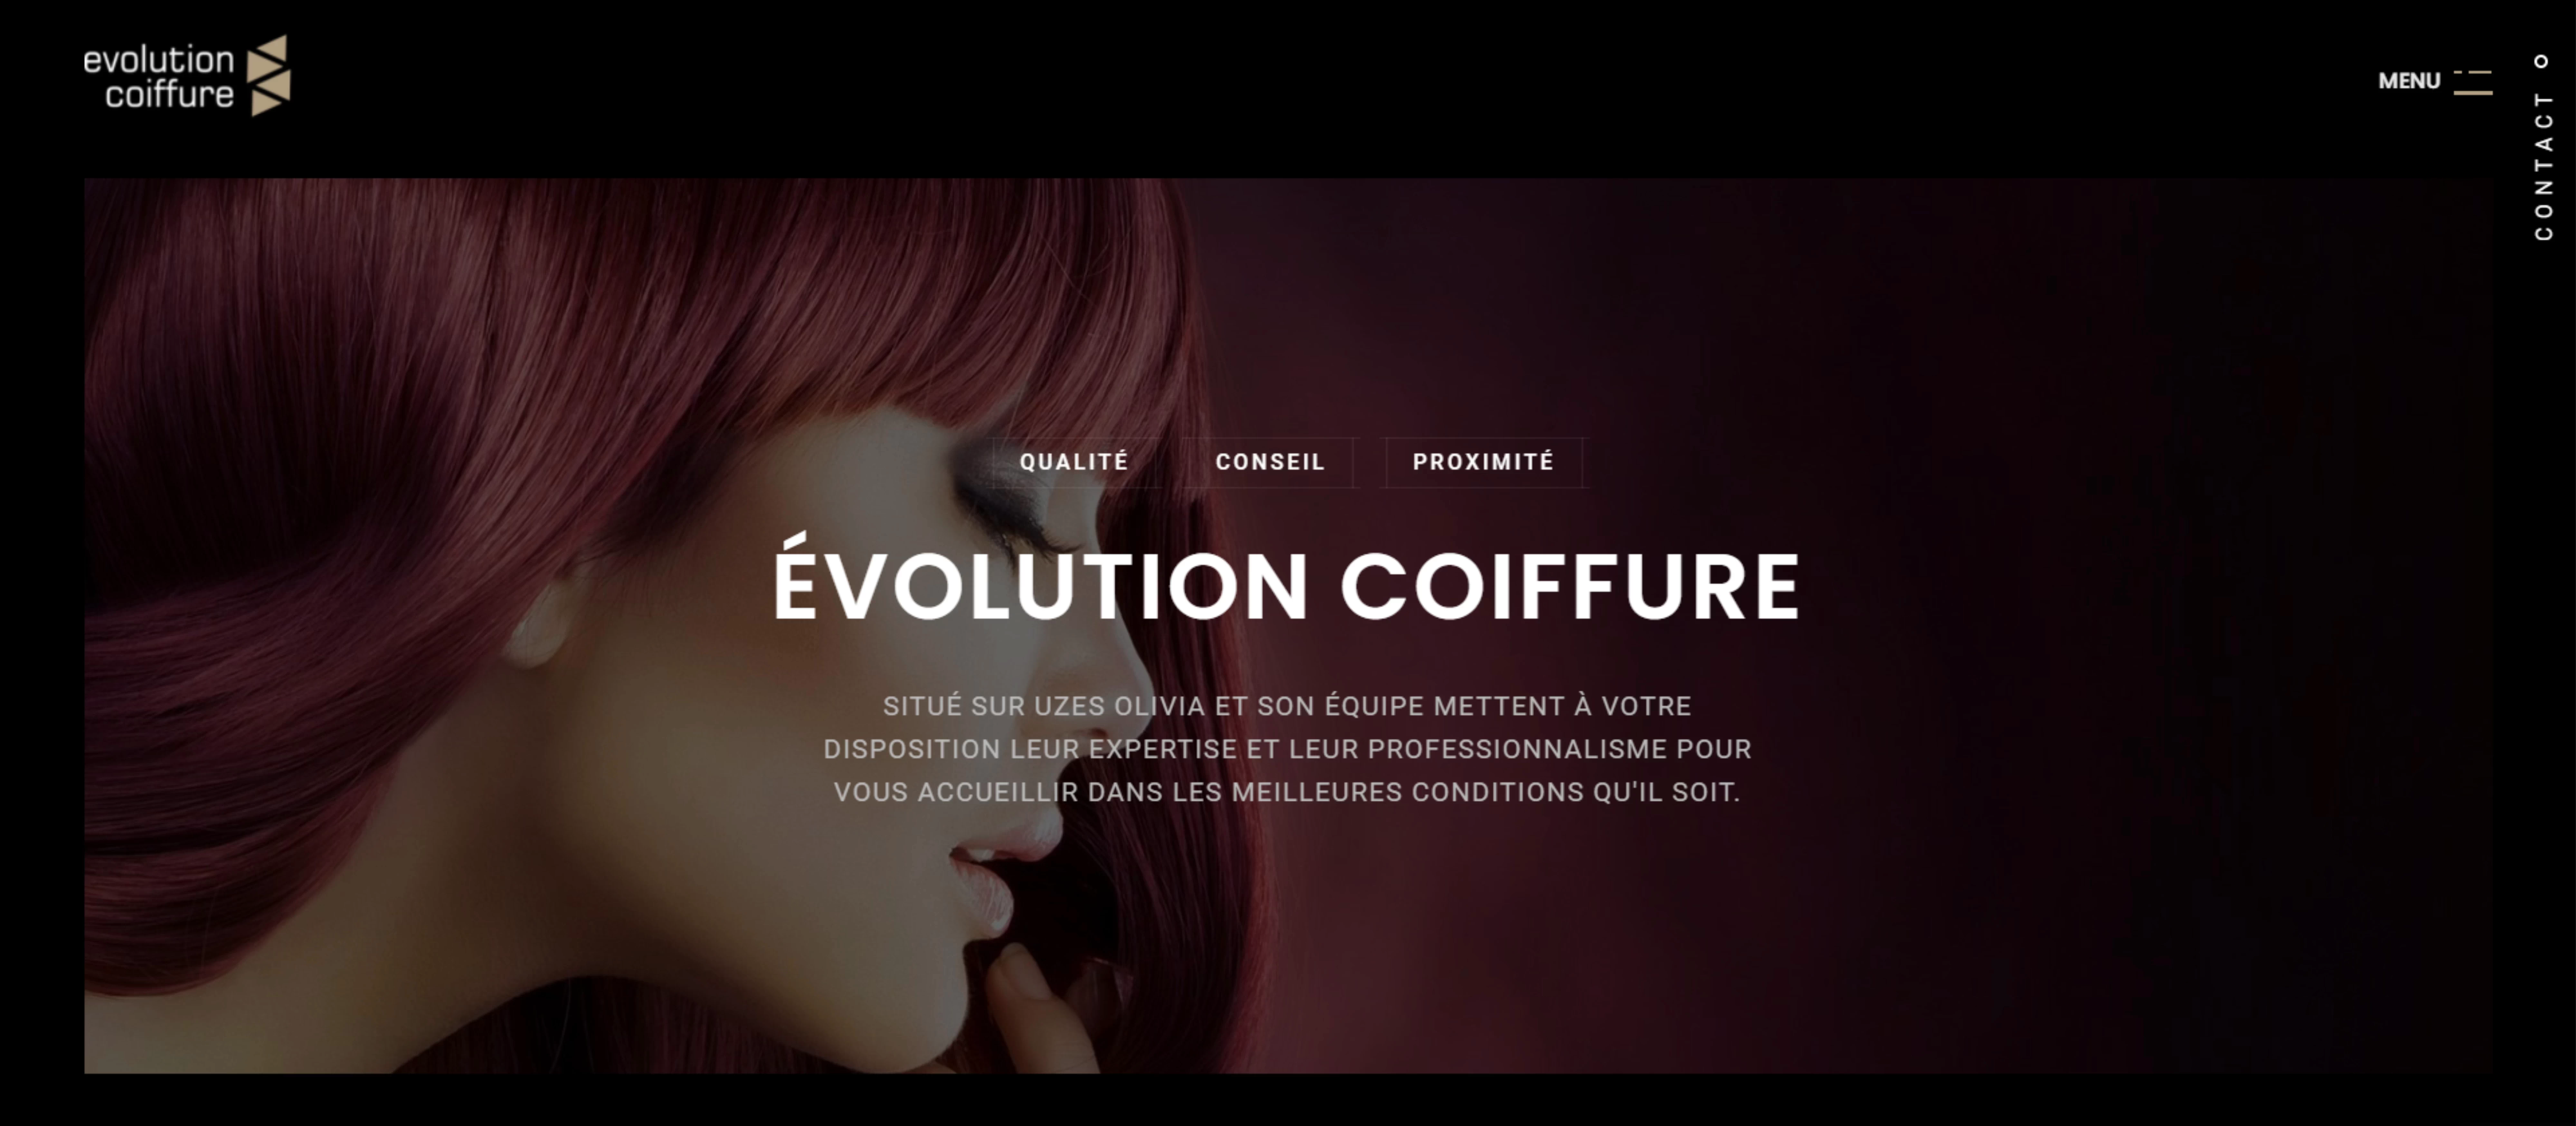 site web evolution coiffure